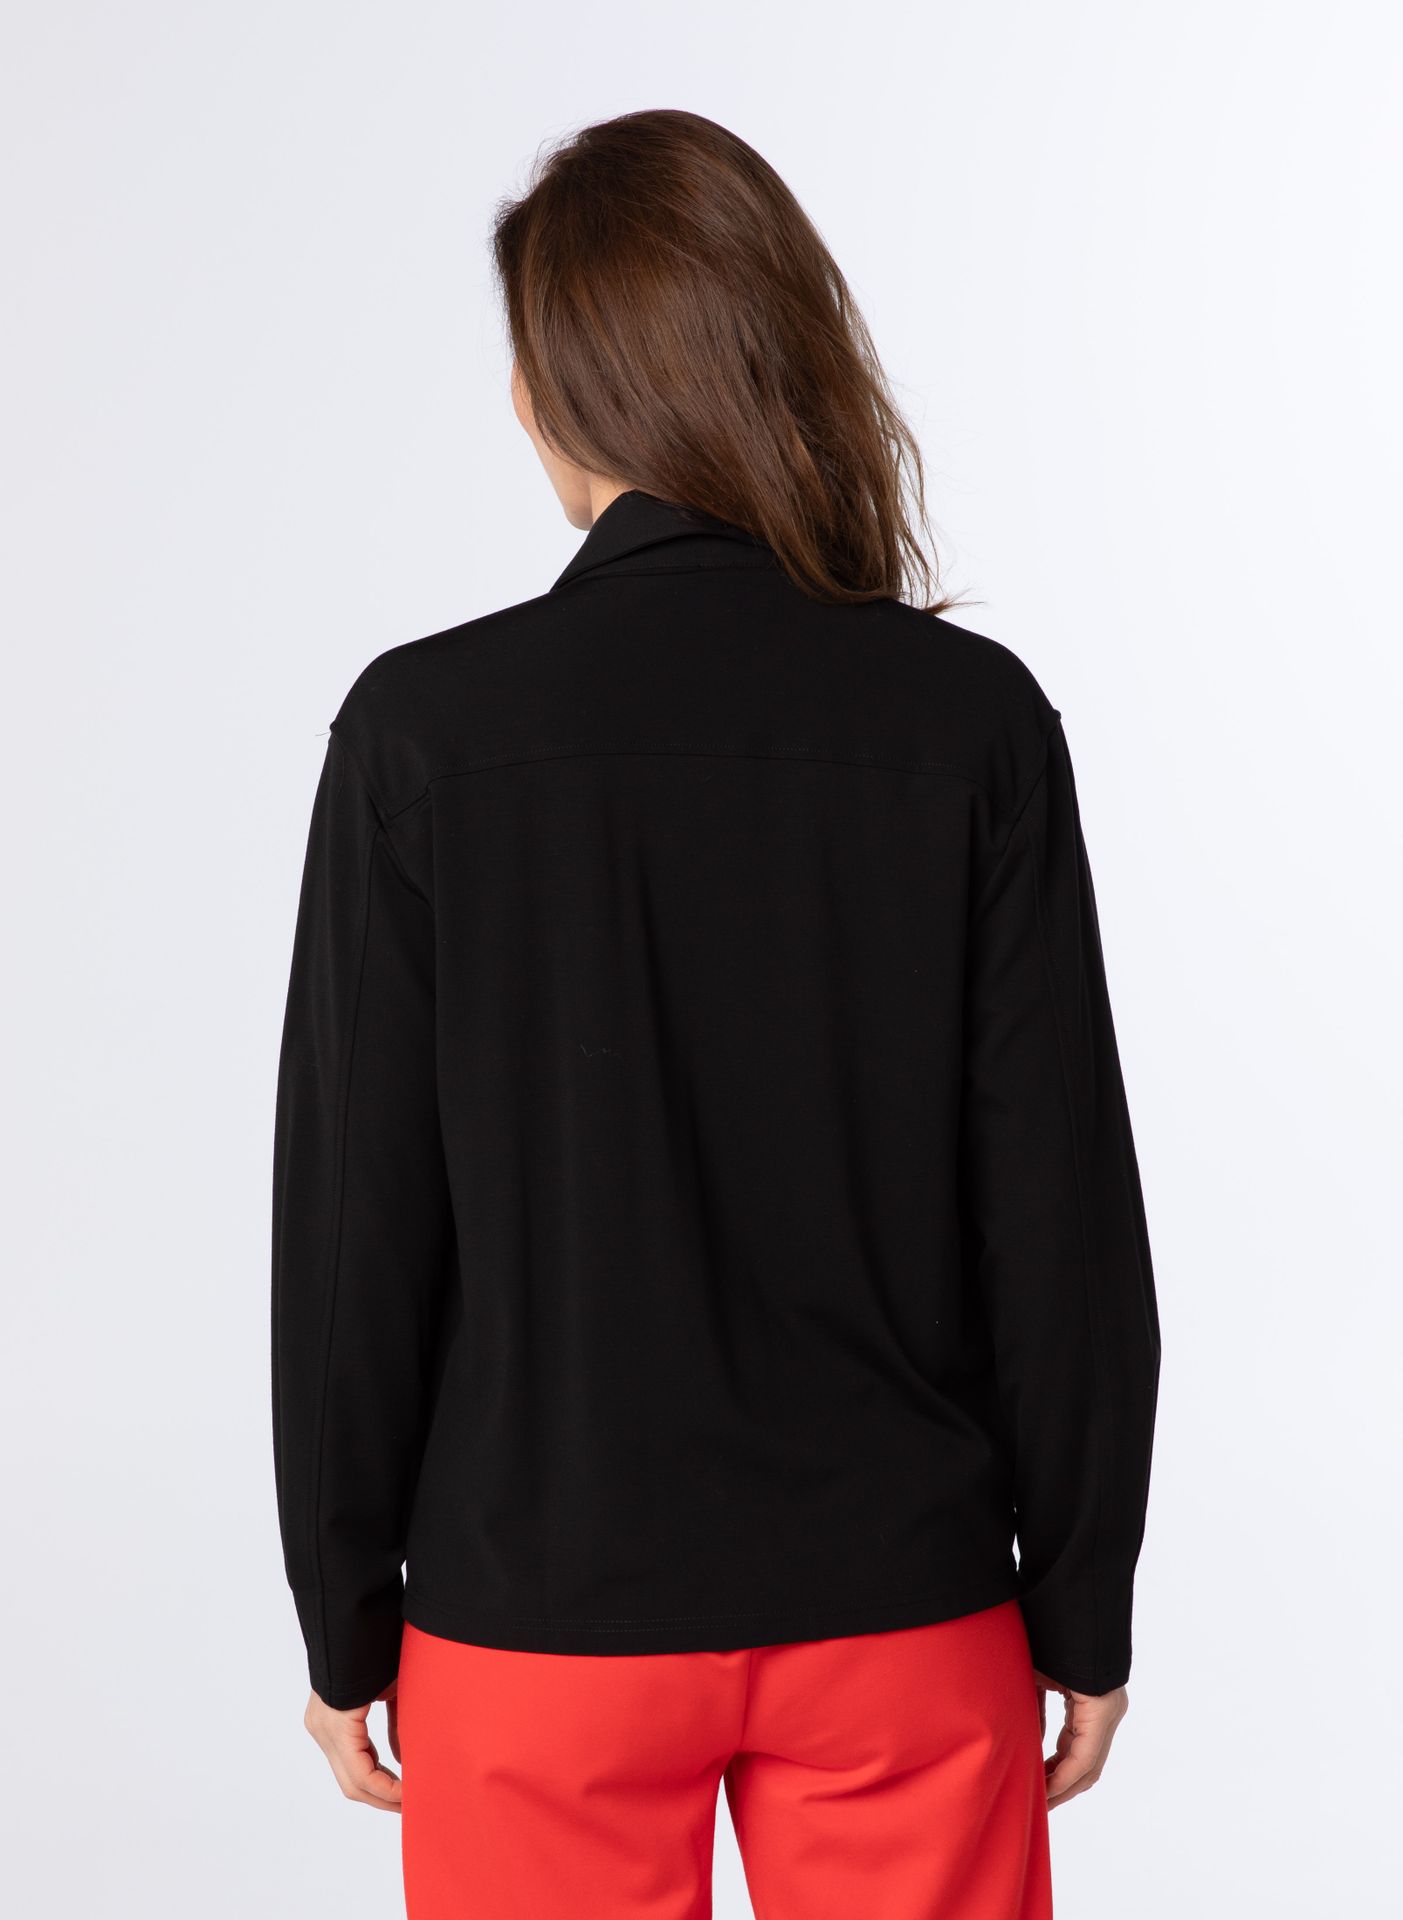 Norah Zwarte sportieve jacket black 212174-001